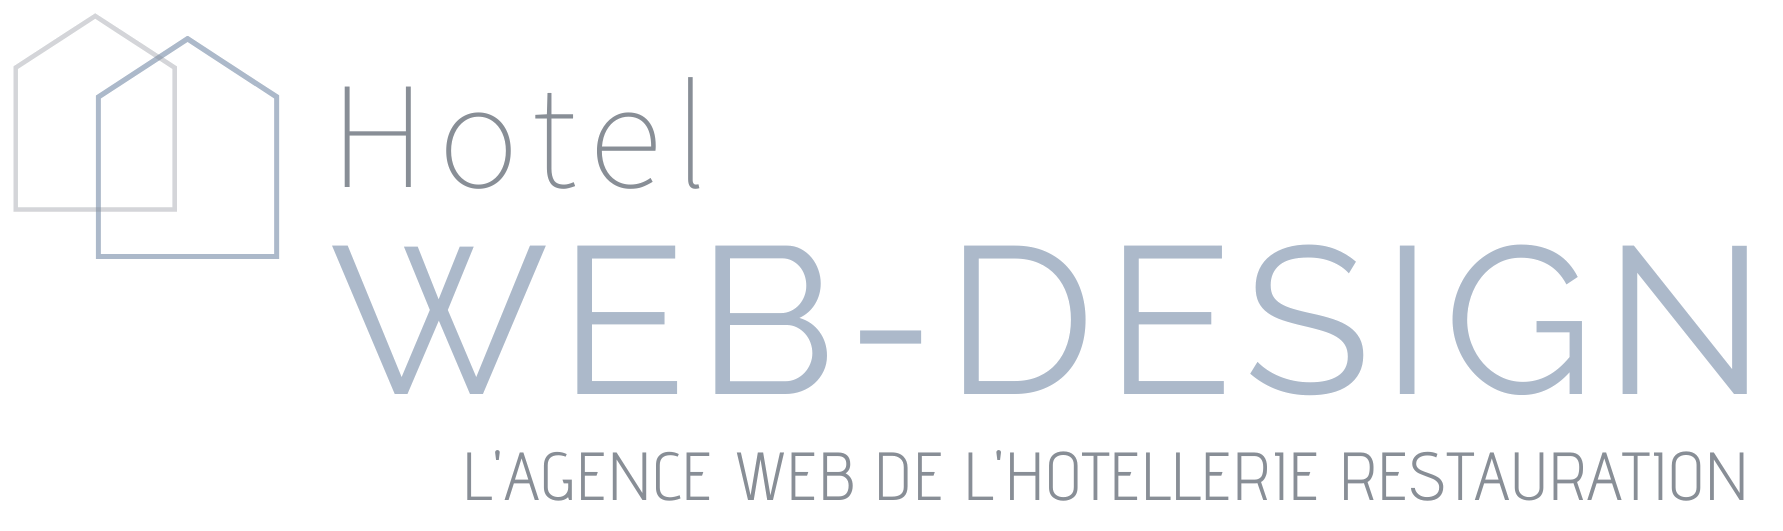 Hotel & Tourism Website Design | Hotel Web Design